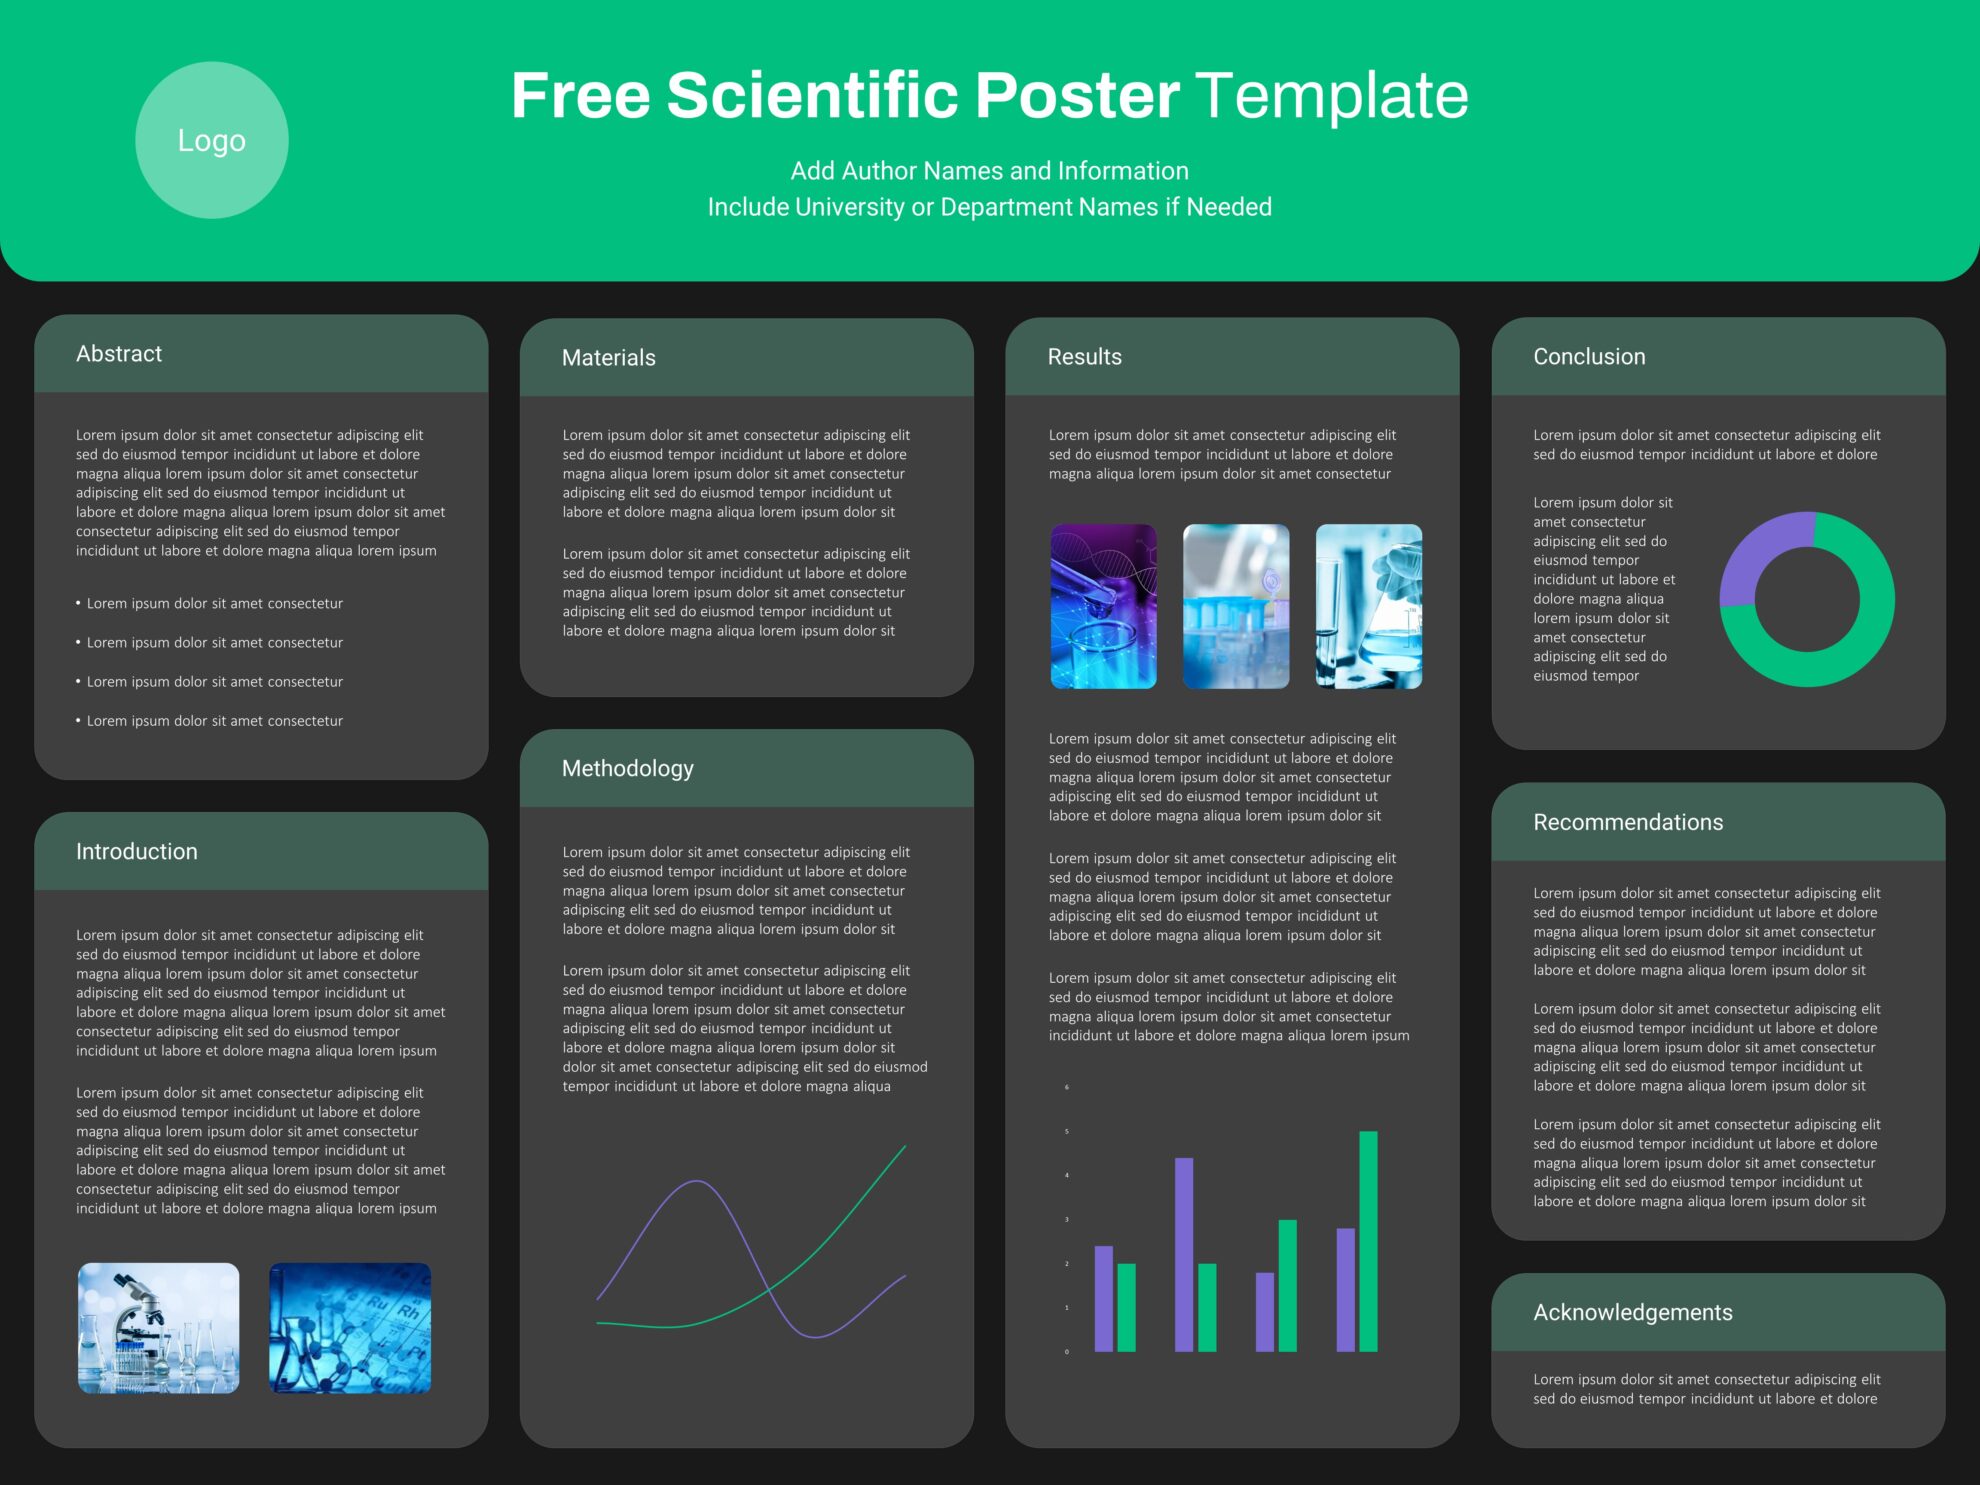 Free Scientific Poster PowerPoint Template SlideBazaar